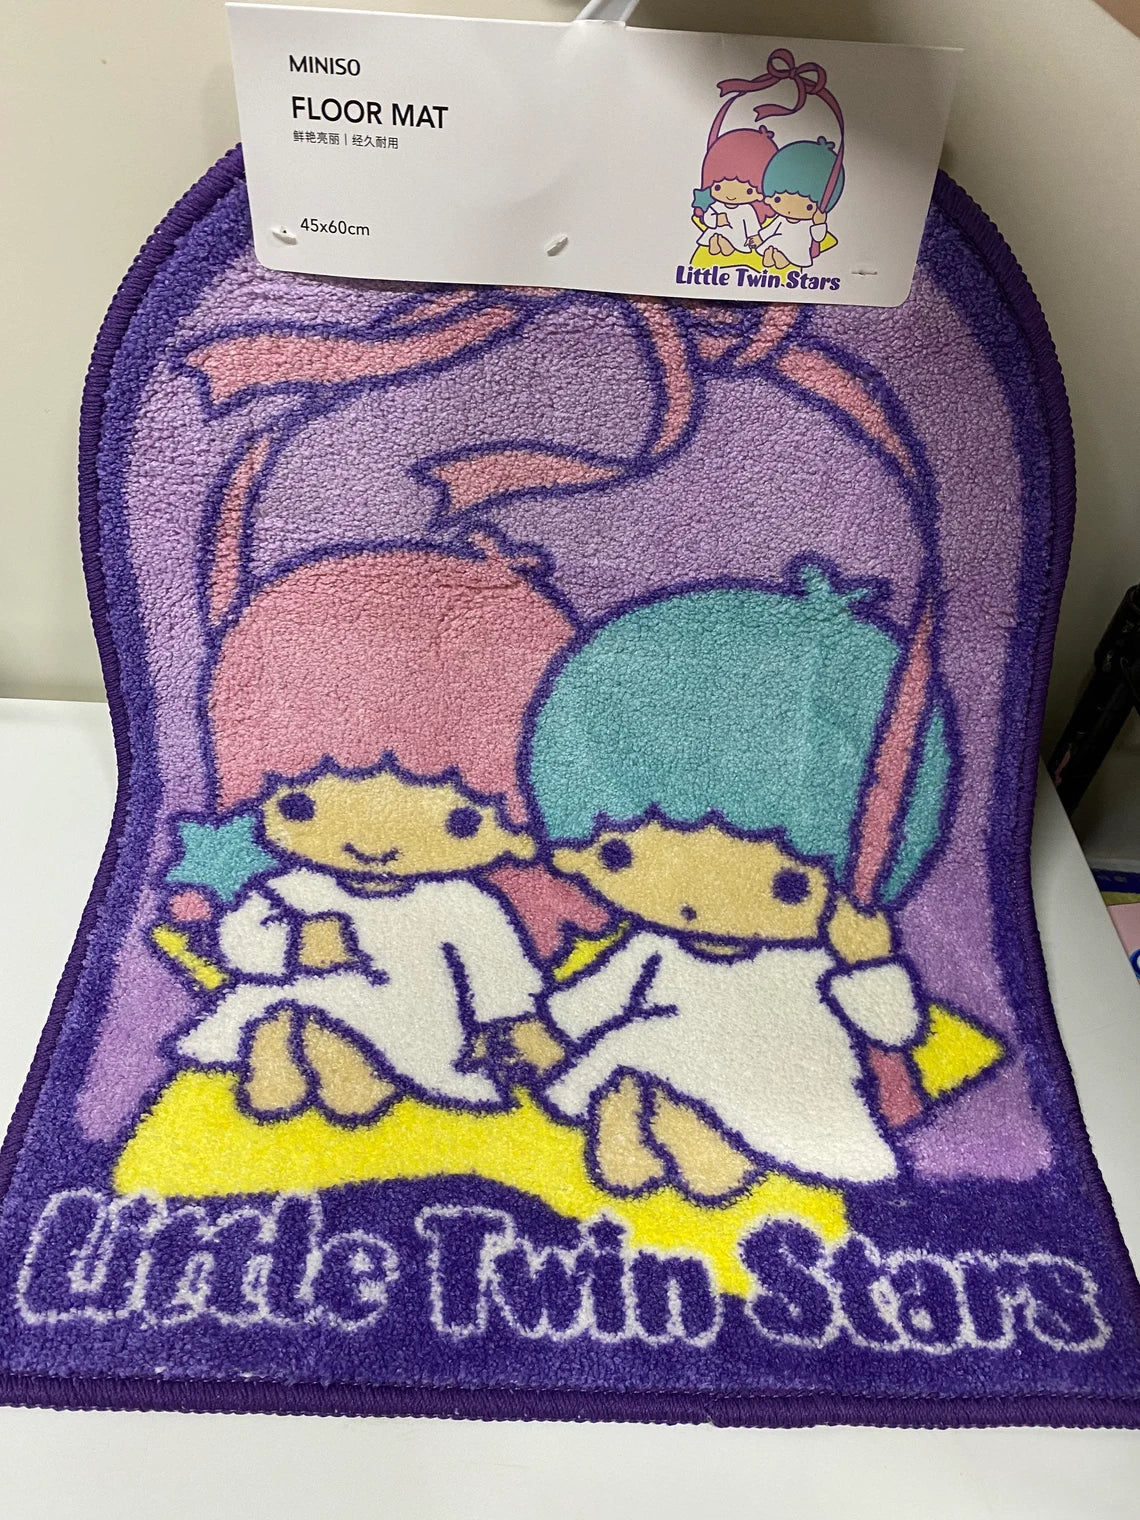 Sanrio Little Twin Star Floor Mat